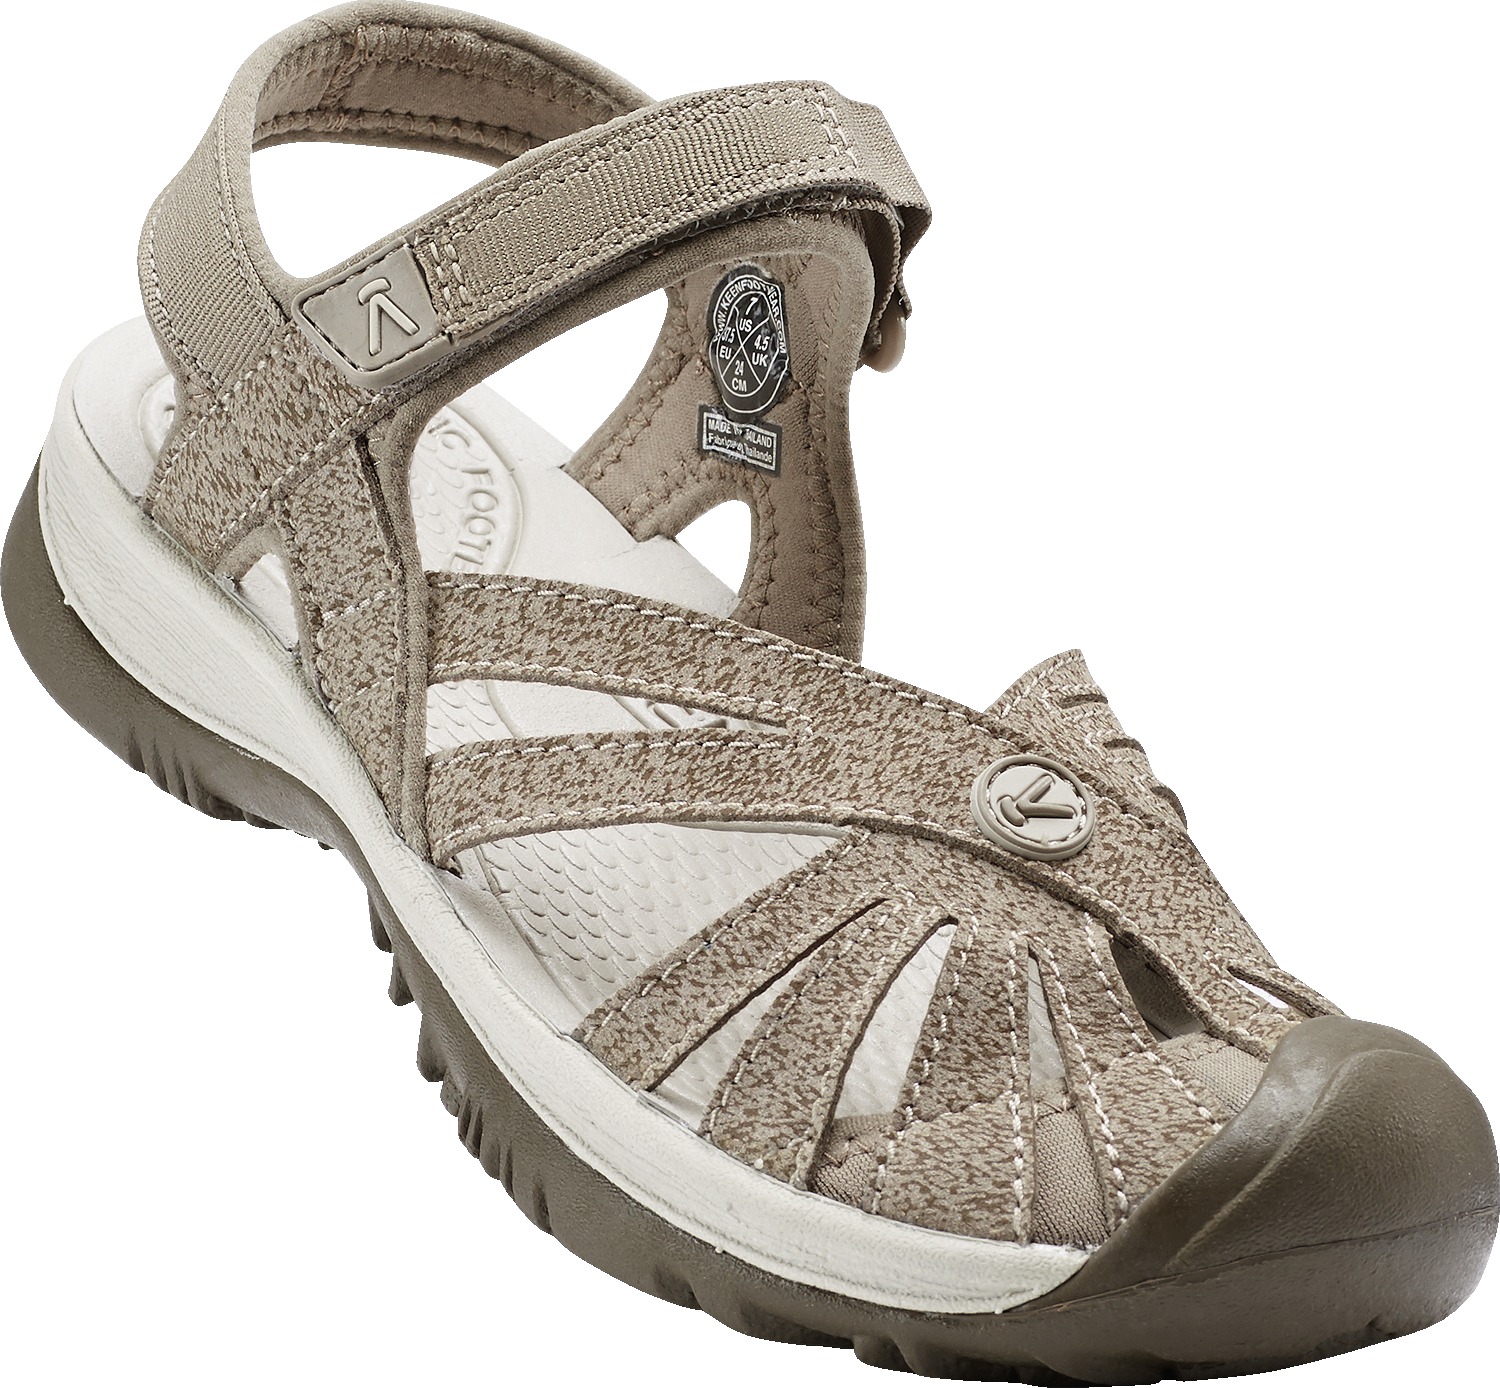 Keen dámské sandály Rose Sandal Women - Brindle/Shitake Barva: brindle/shitake, Velikost: 9 UK (43 EU / 29 cm)